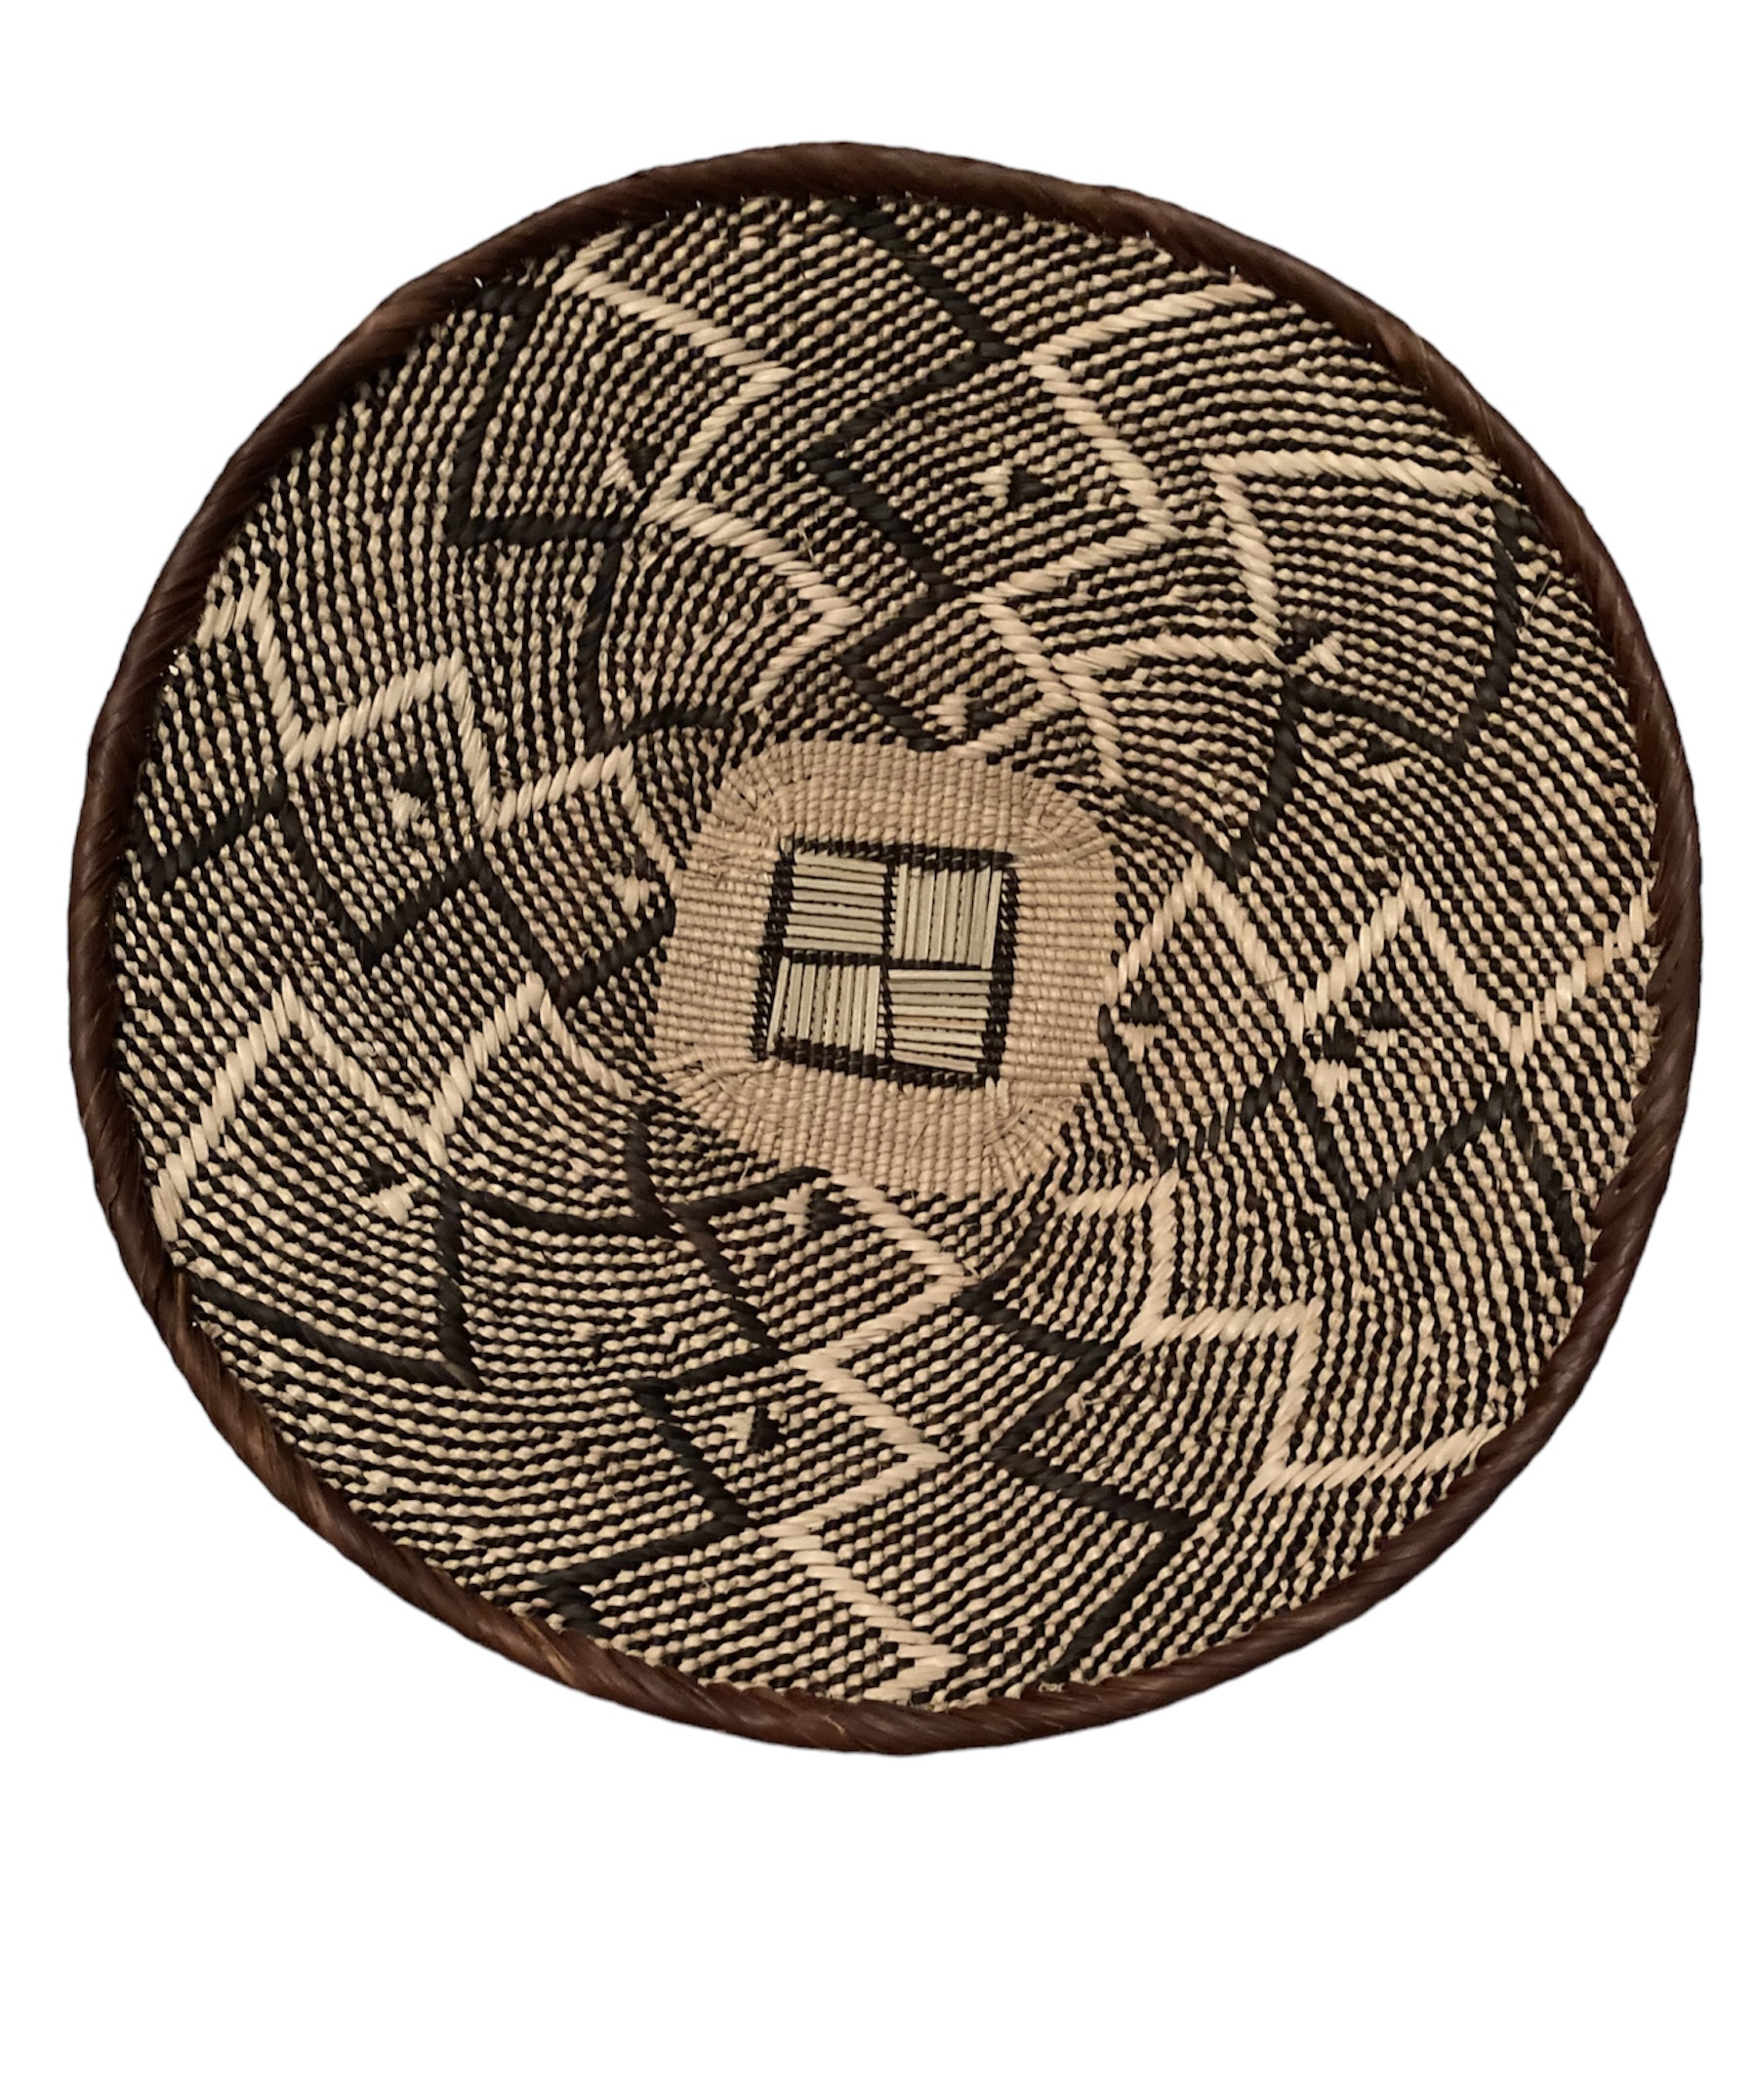 Tonga Basket from Zimbabwe - Design #005 - 15" dia.